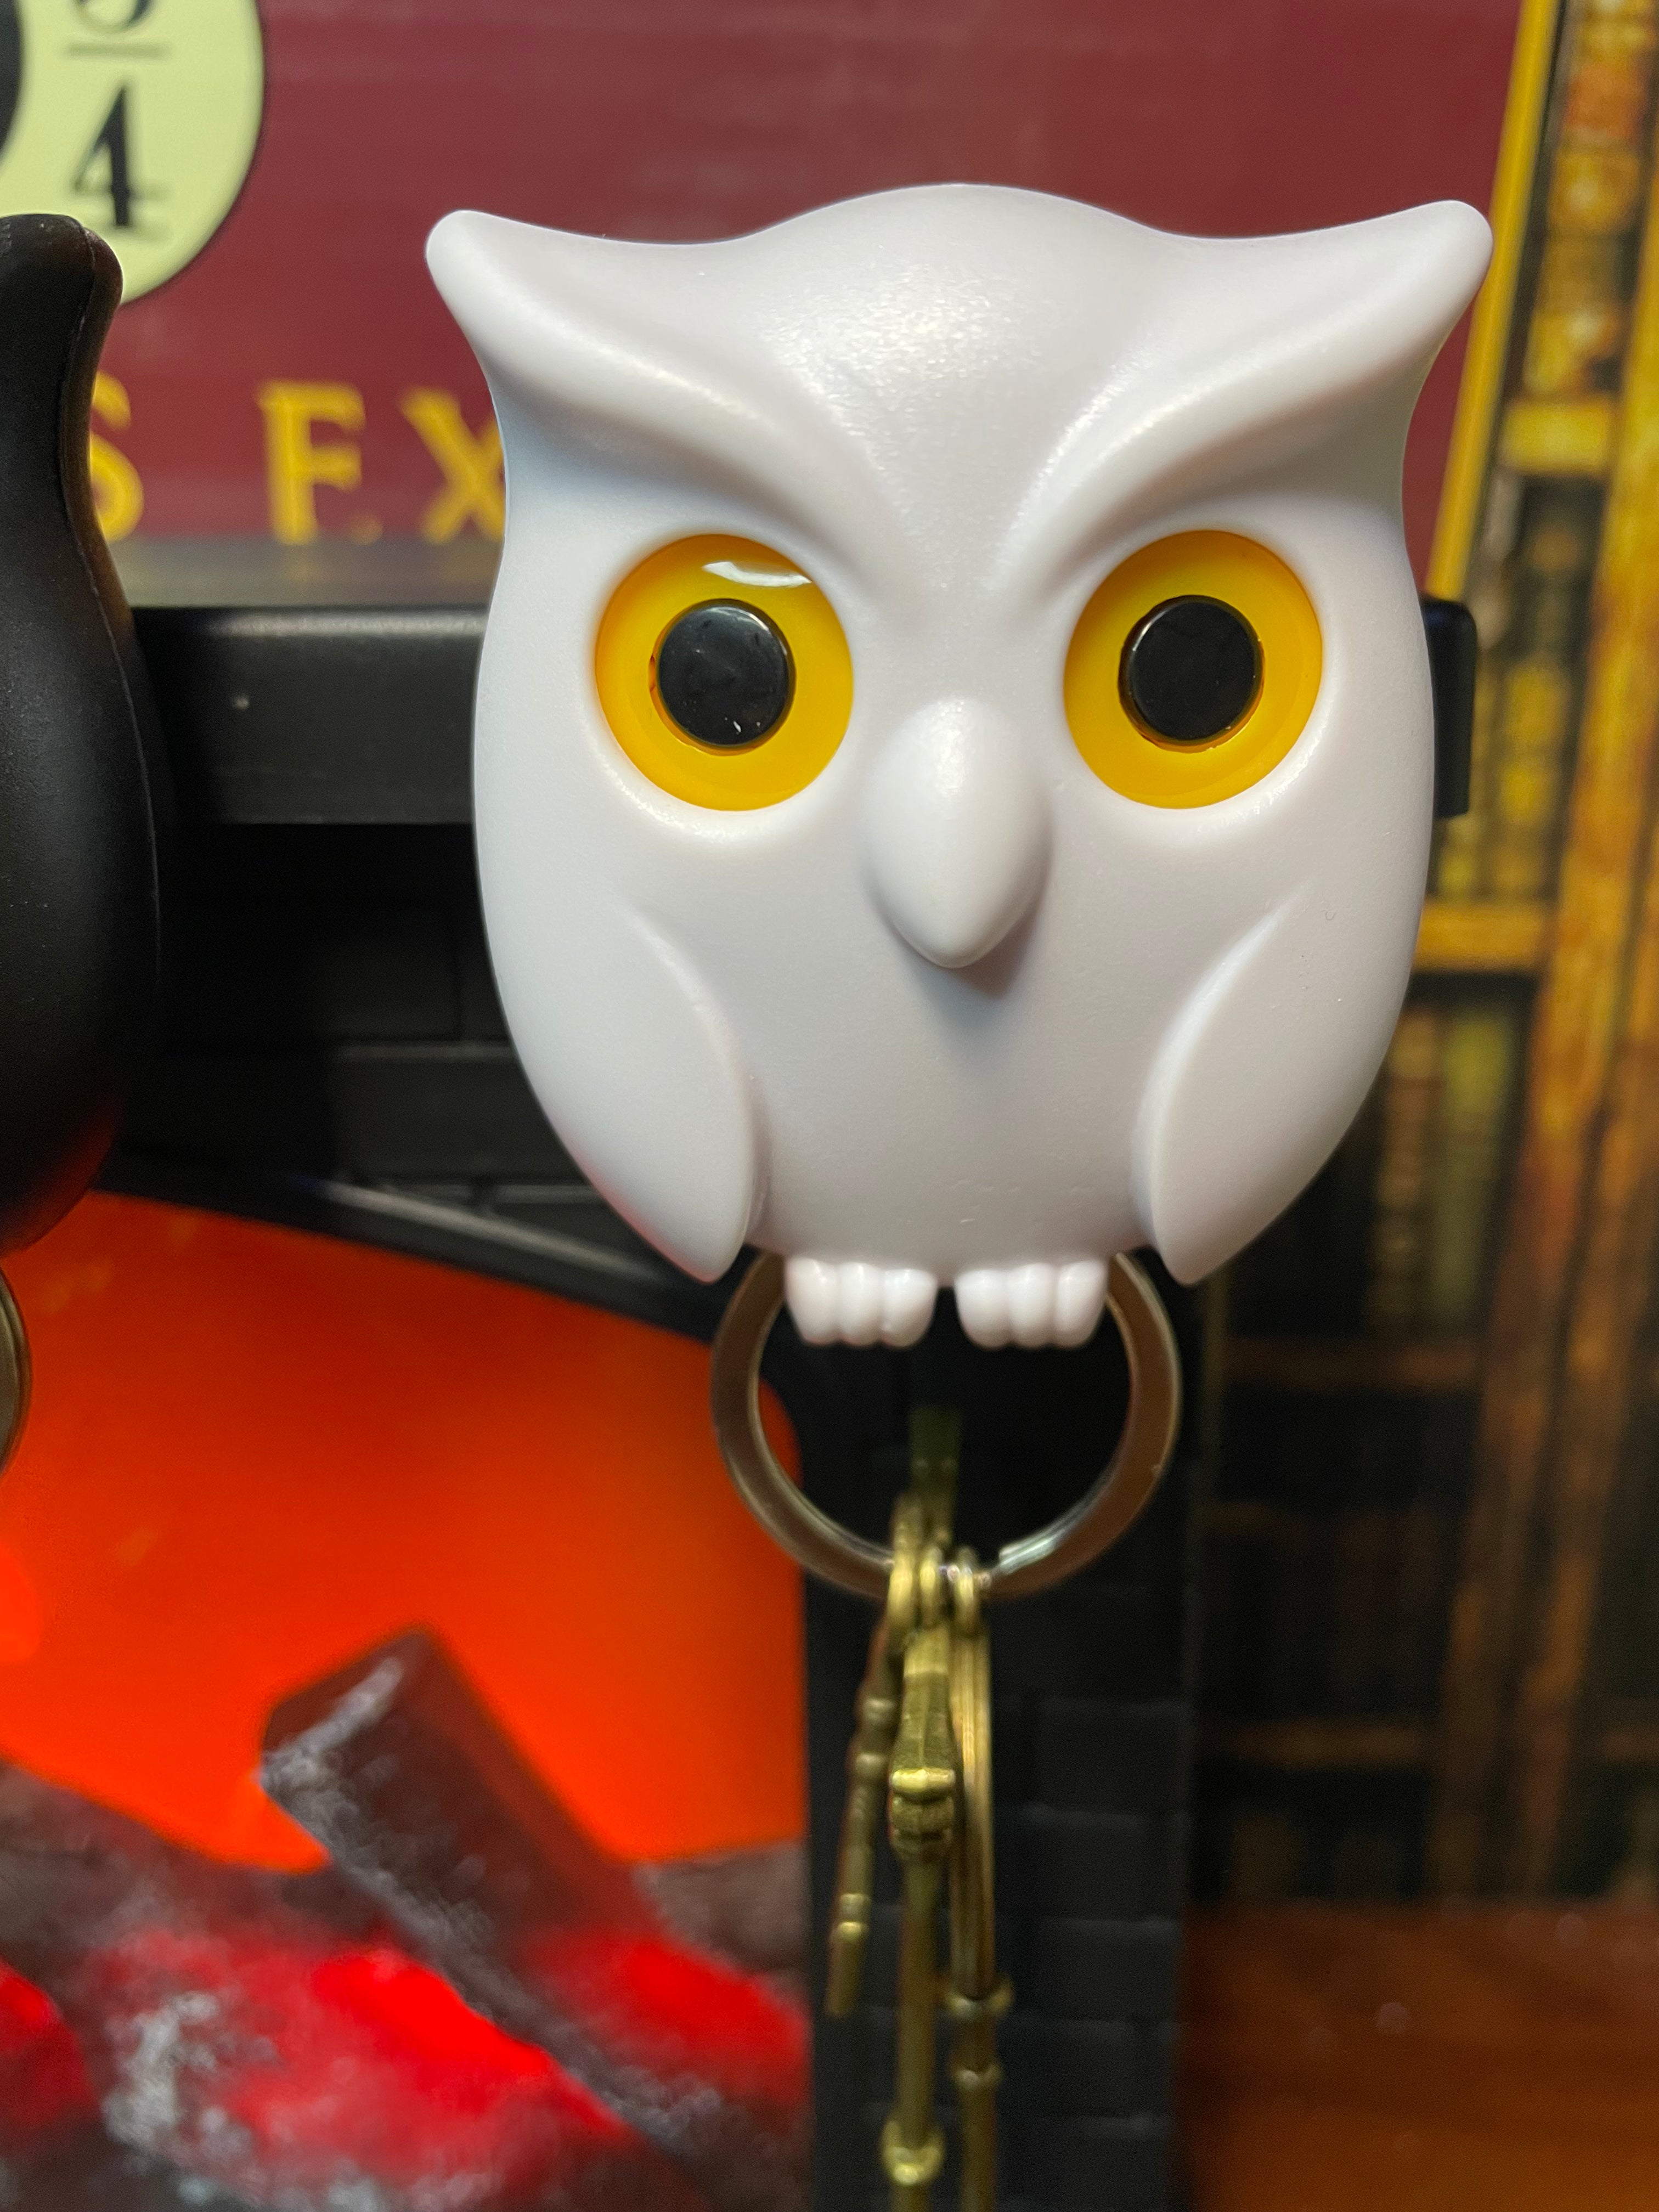 Owl key keeper